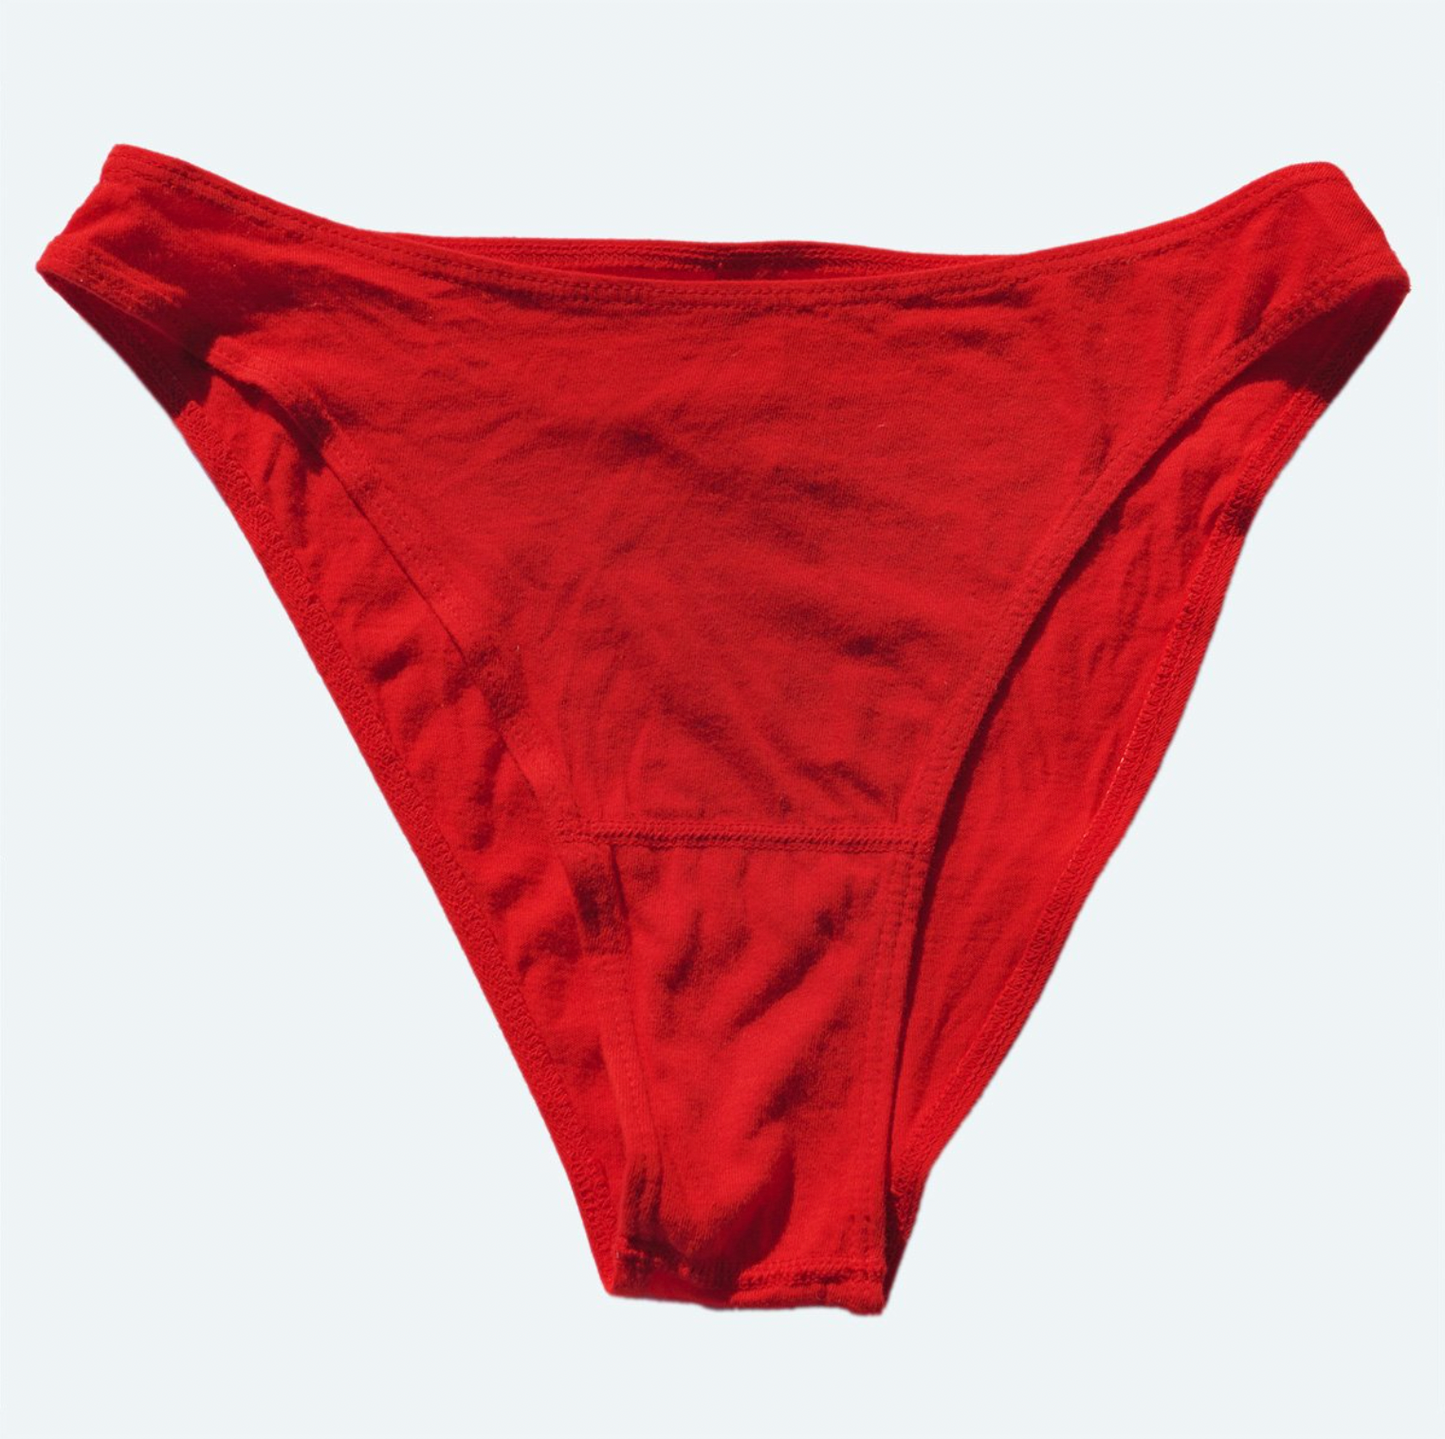 French Cut Underwear- Red